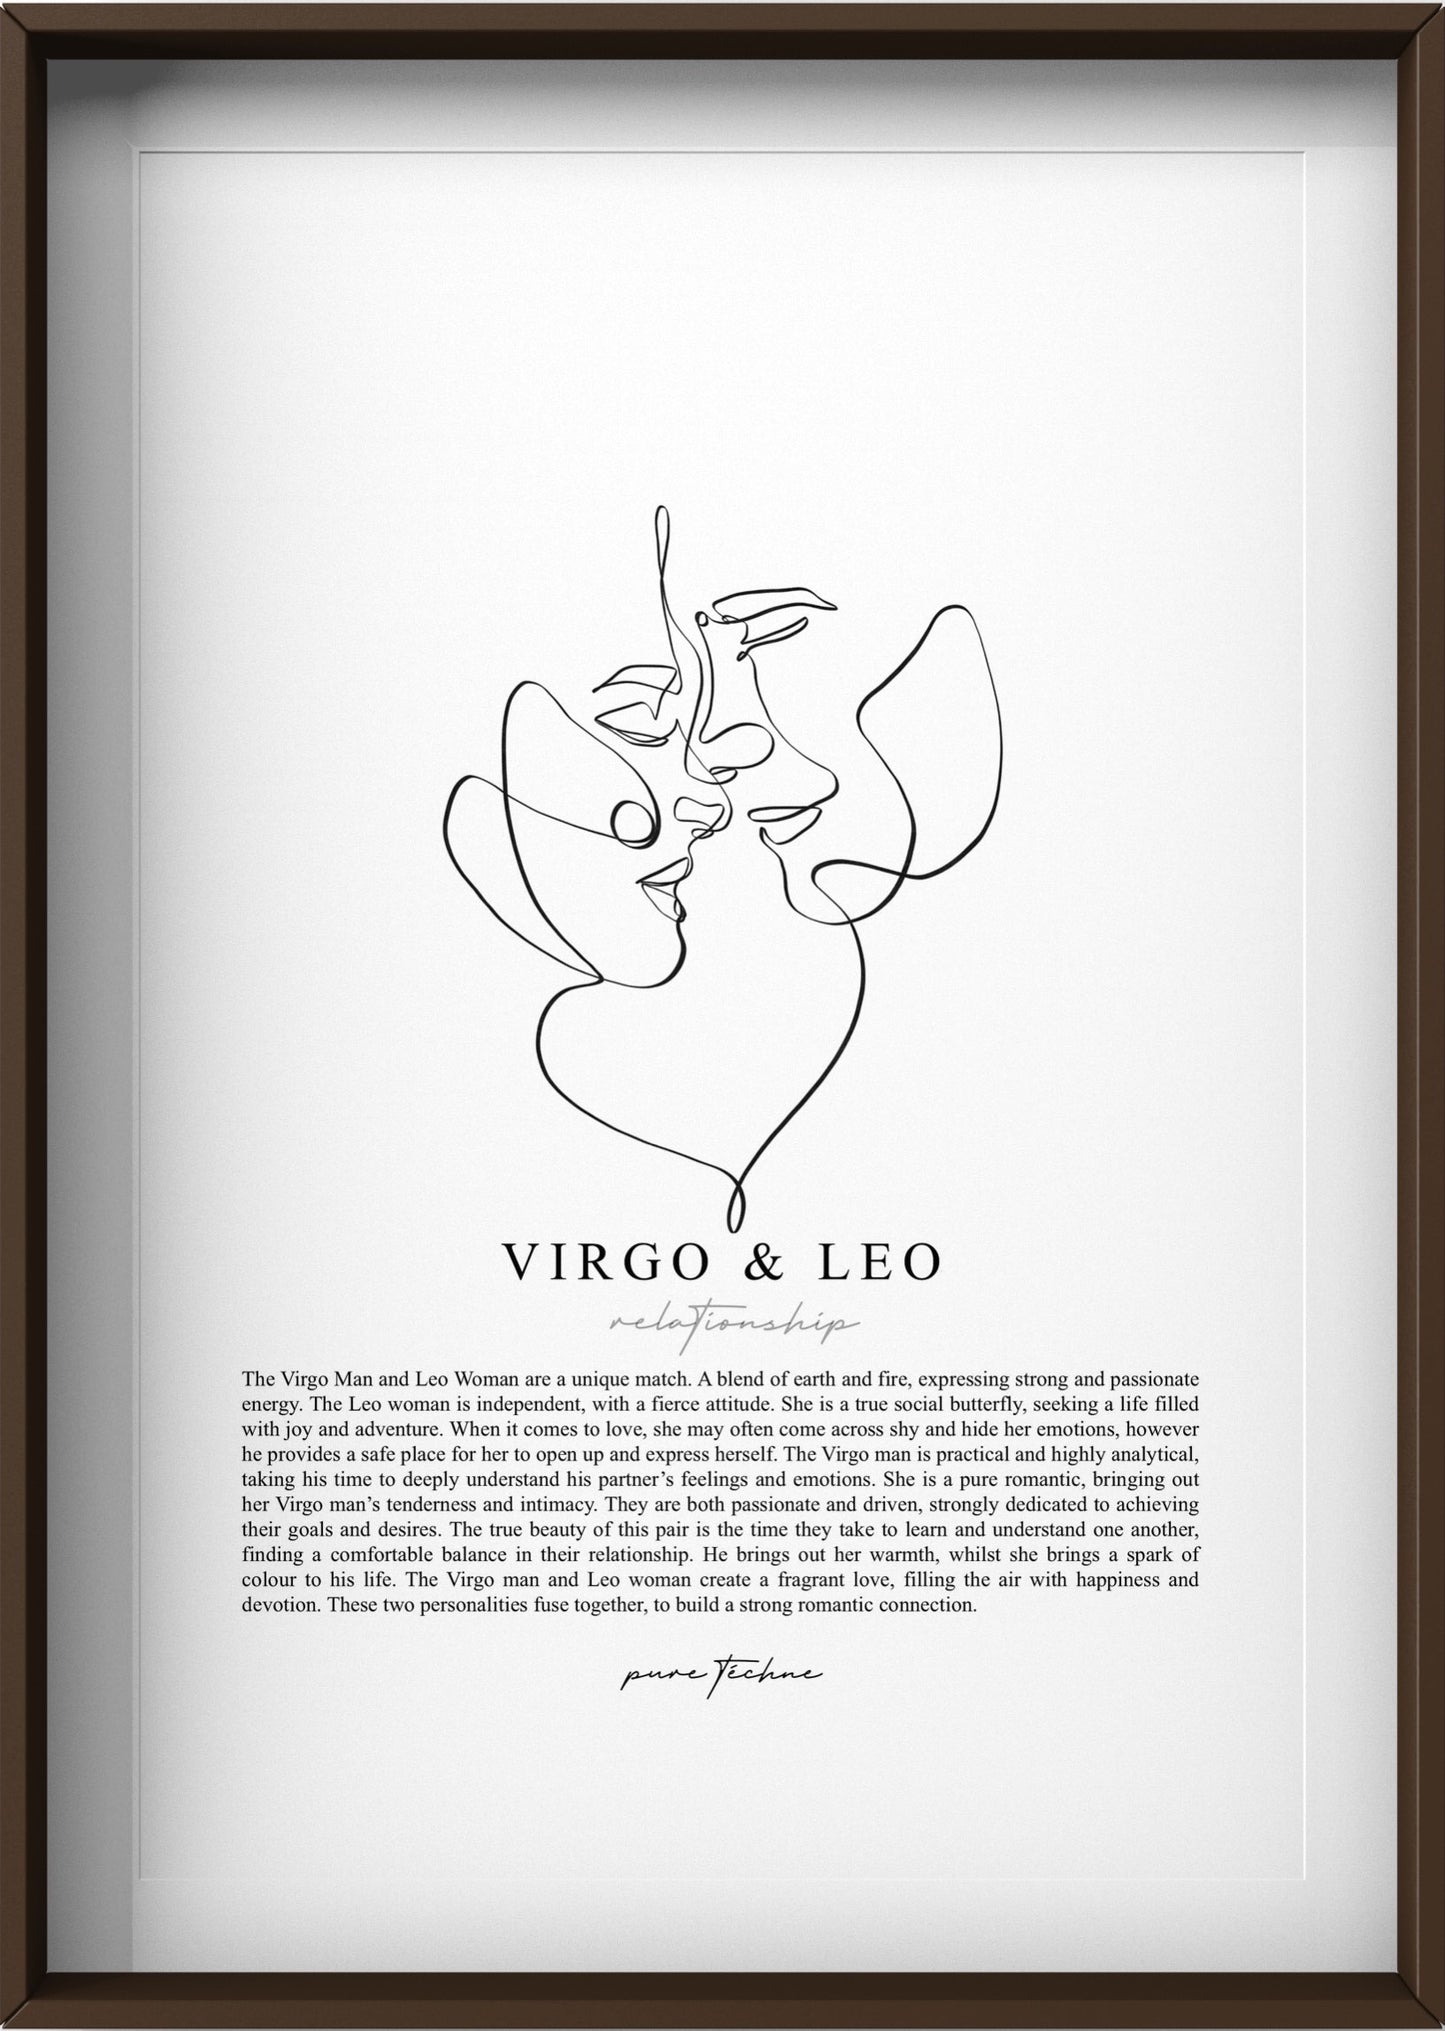 Virgo Man & Leo Woman